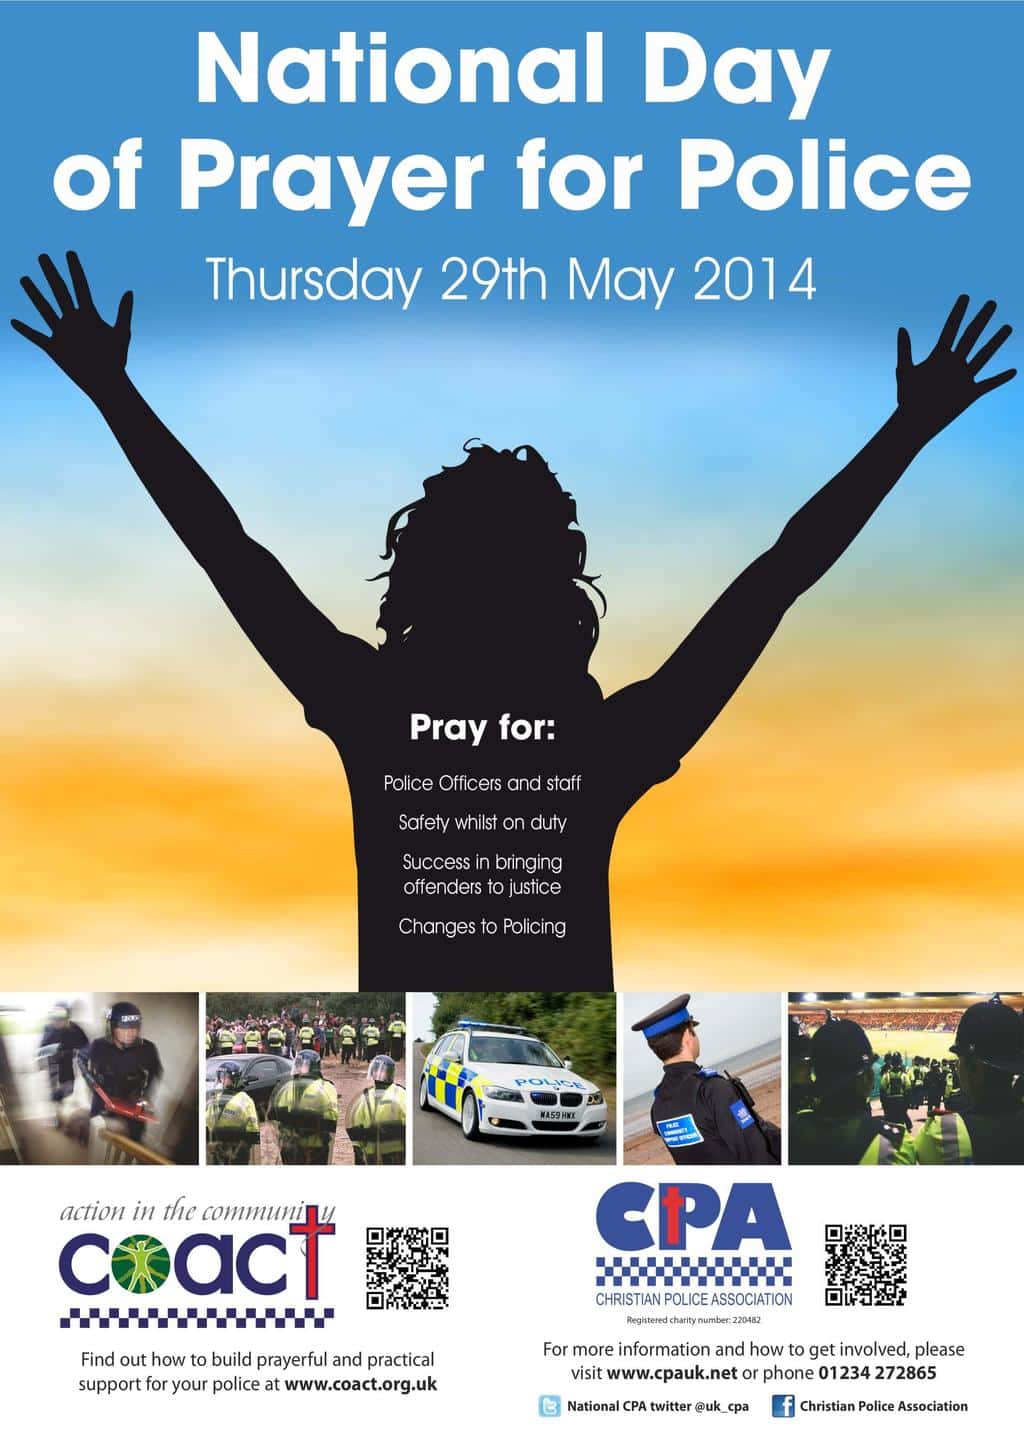 2015 National Day of Prayer Logo - National Day of Prayer for Police